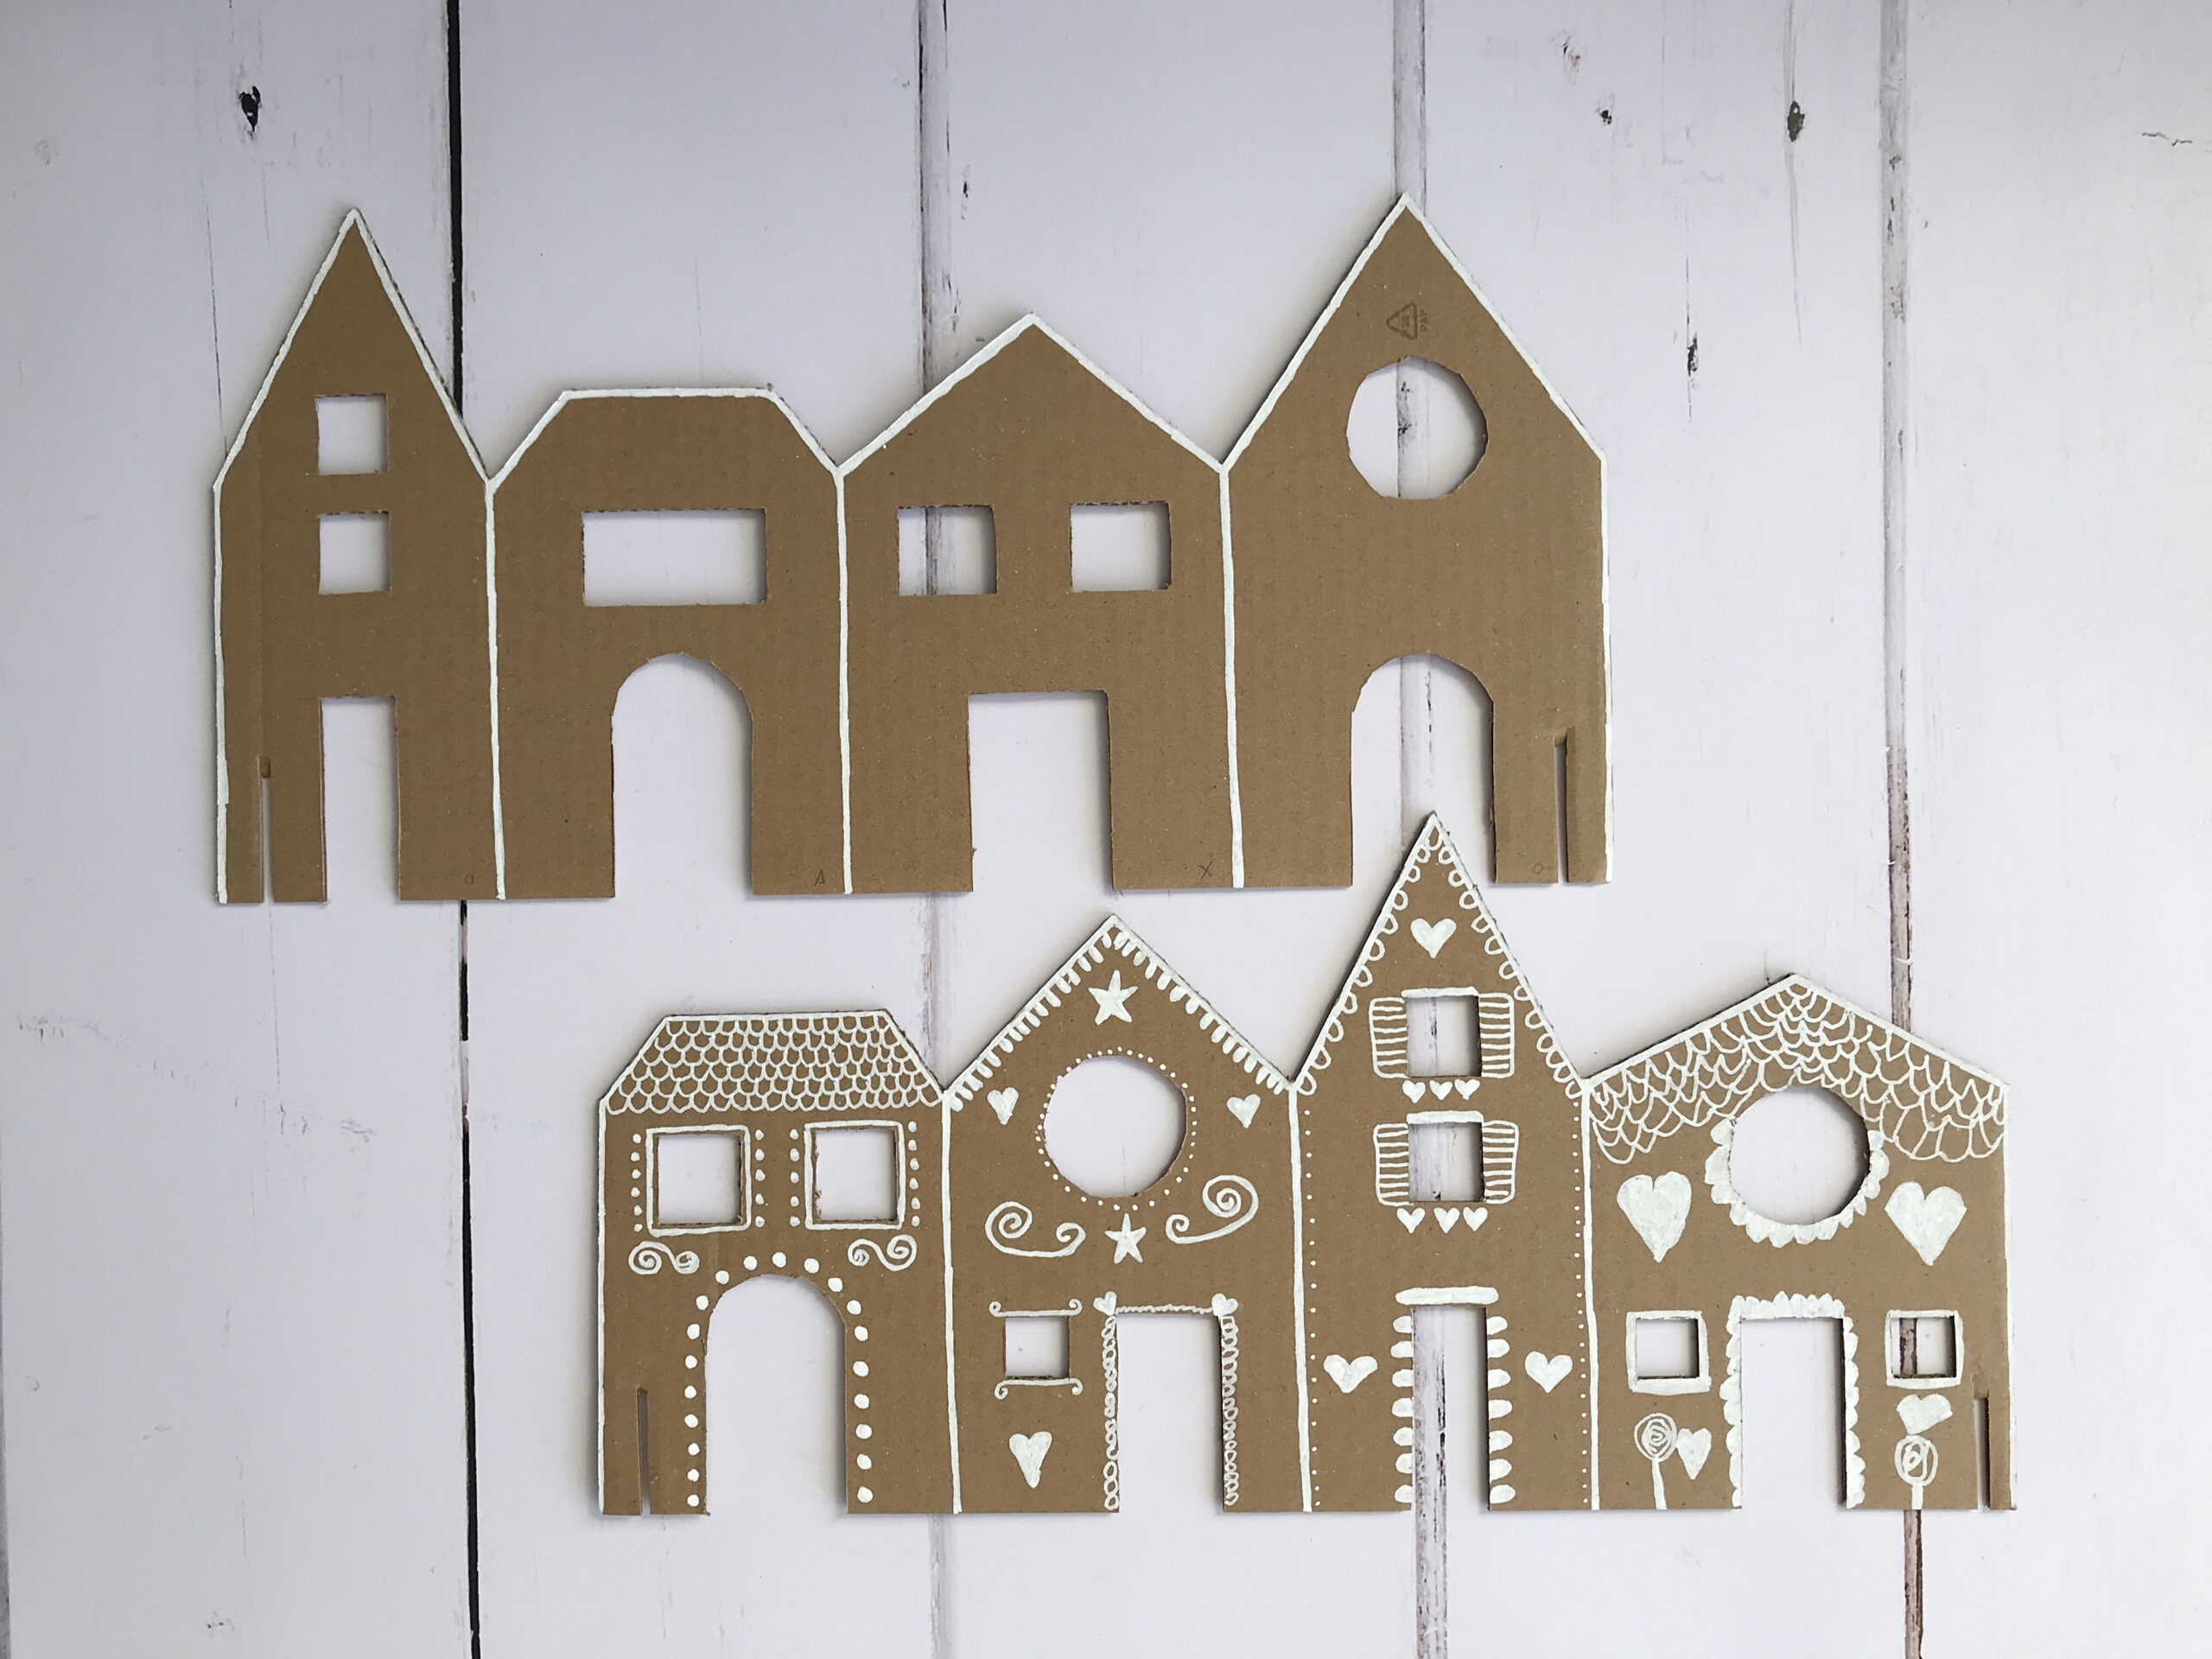 DIY Recycled Cardboard Christmas Gingerbread House Village